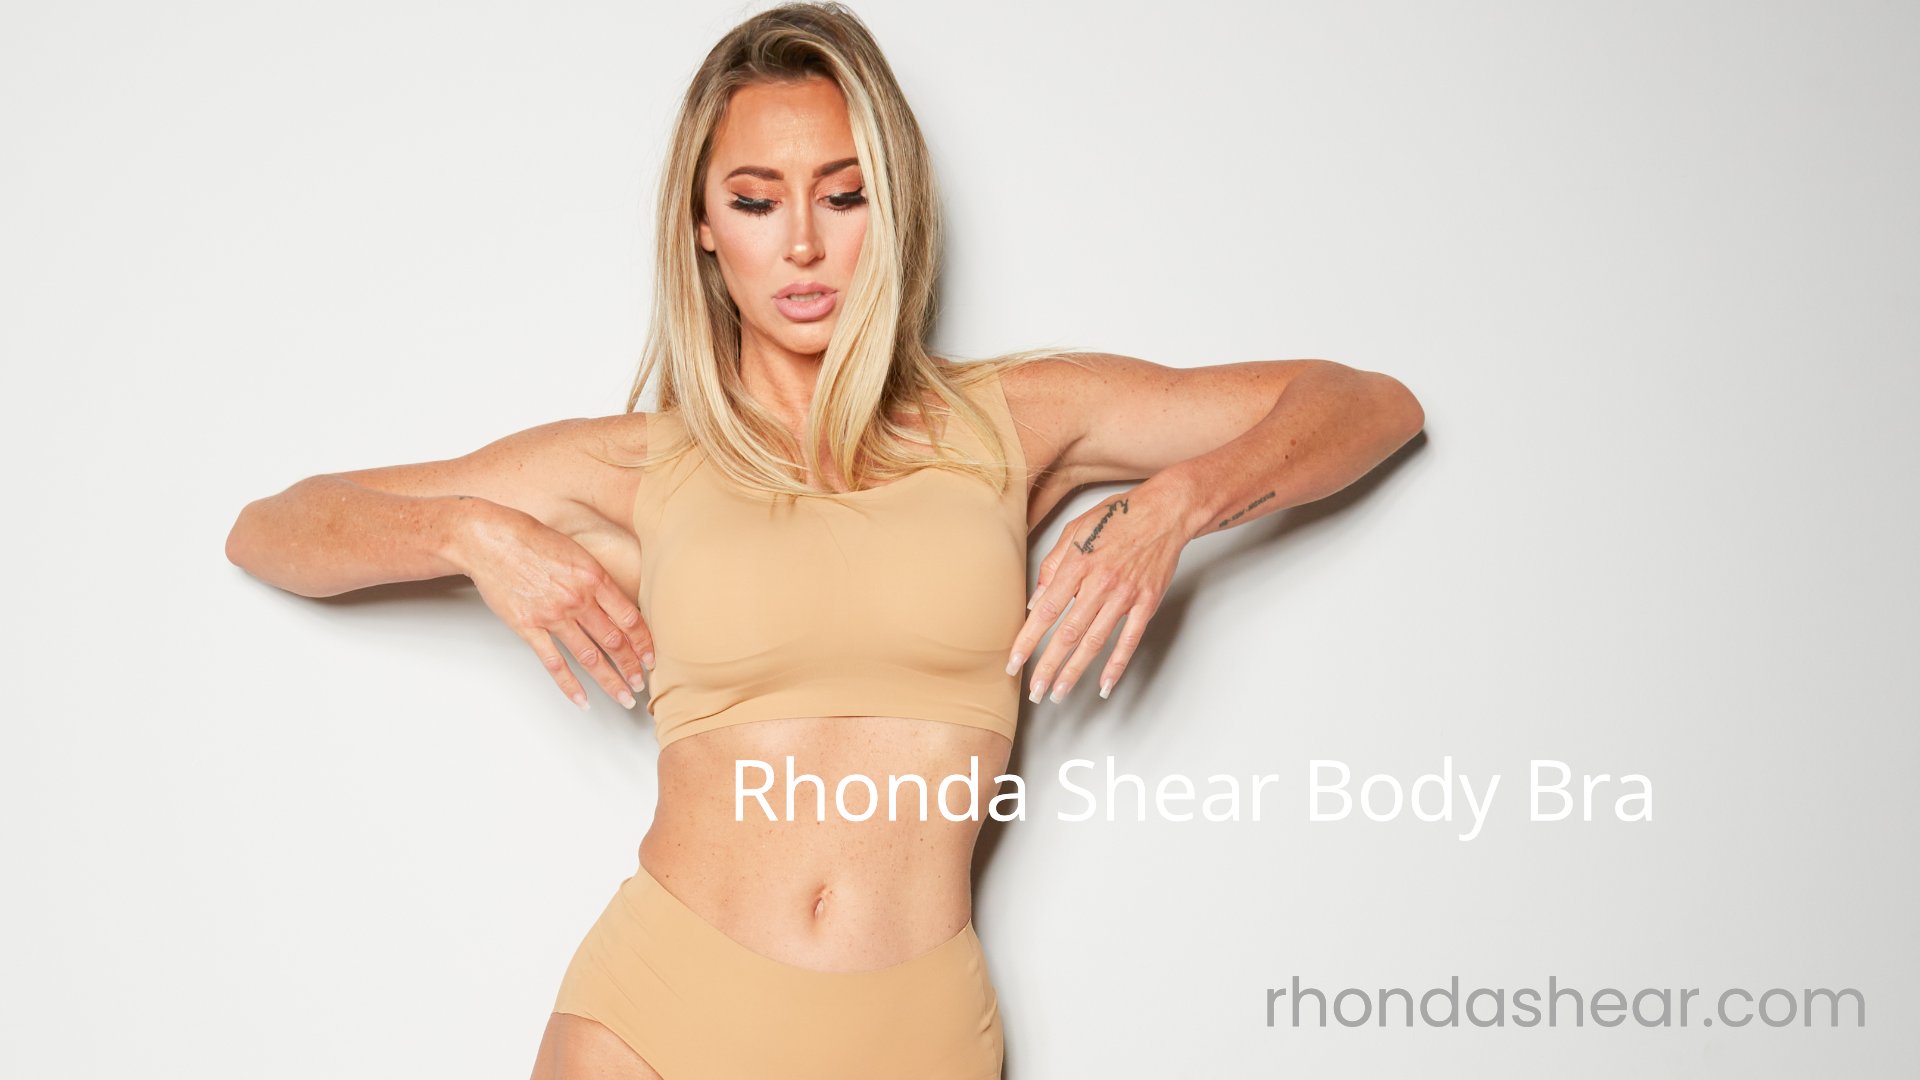 Rhonda Shear on X: Hug those Beautiful Curves with the Rhonda